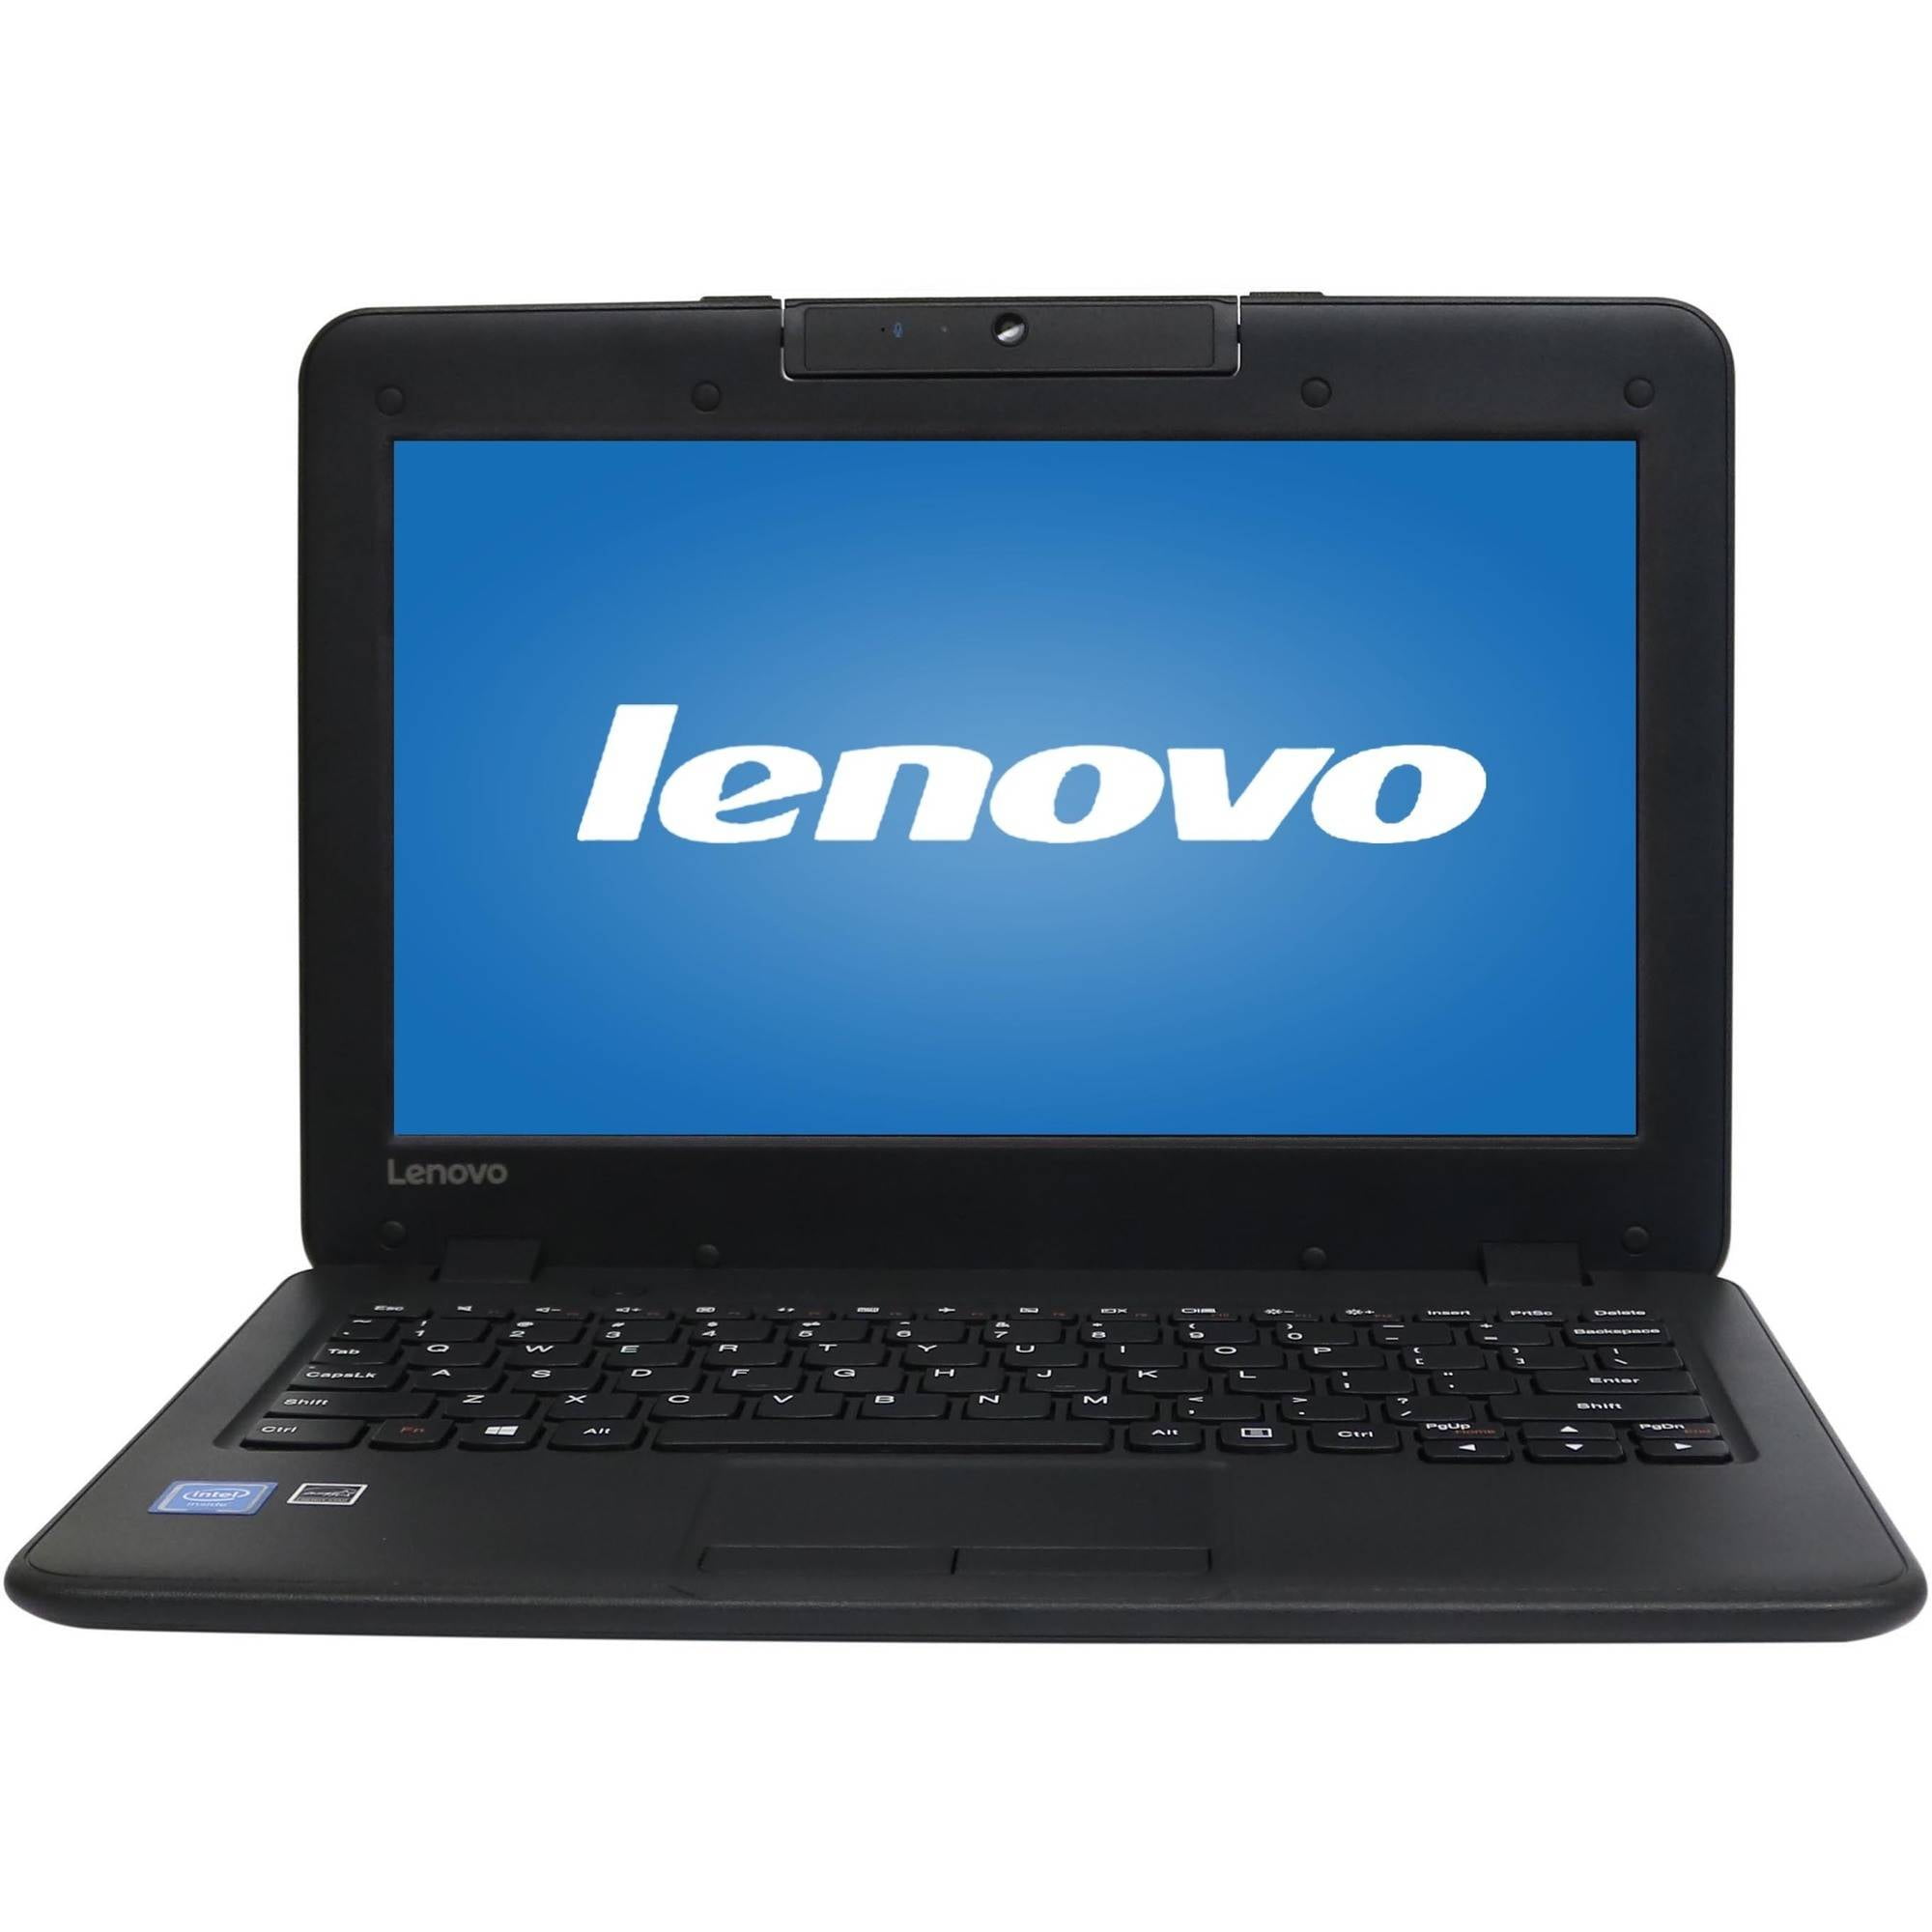 Купить леново днс. Леново нетбук Intel Celeron. Ноутбук Lenovo 22к. Lenovo THINKPAD p73. Lenovo фирма производитель ноутбуков.